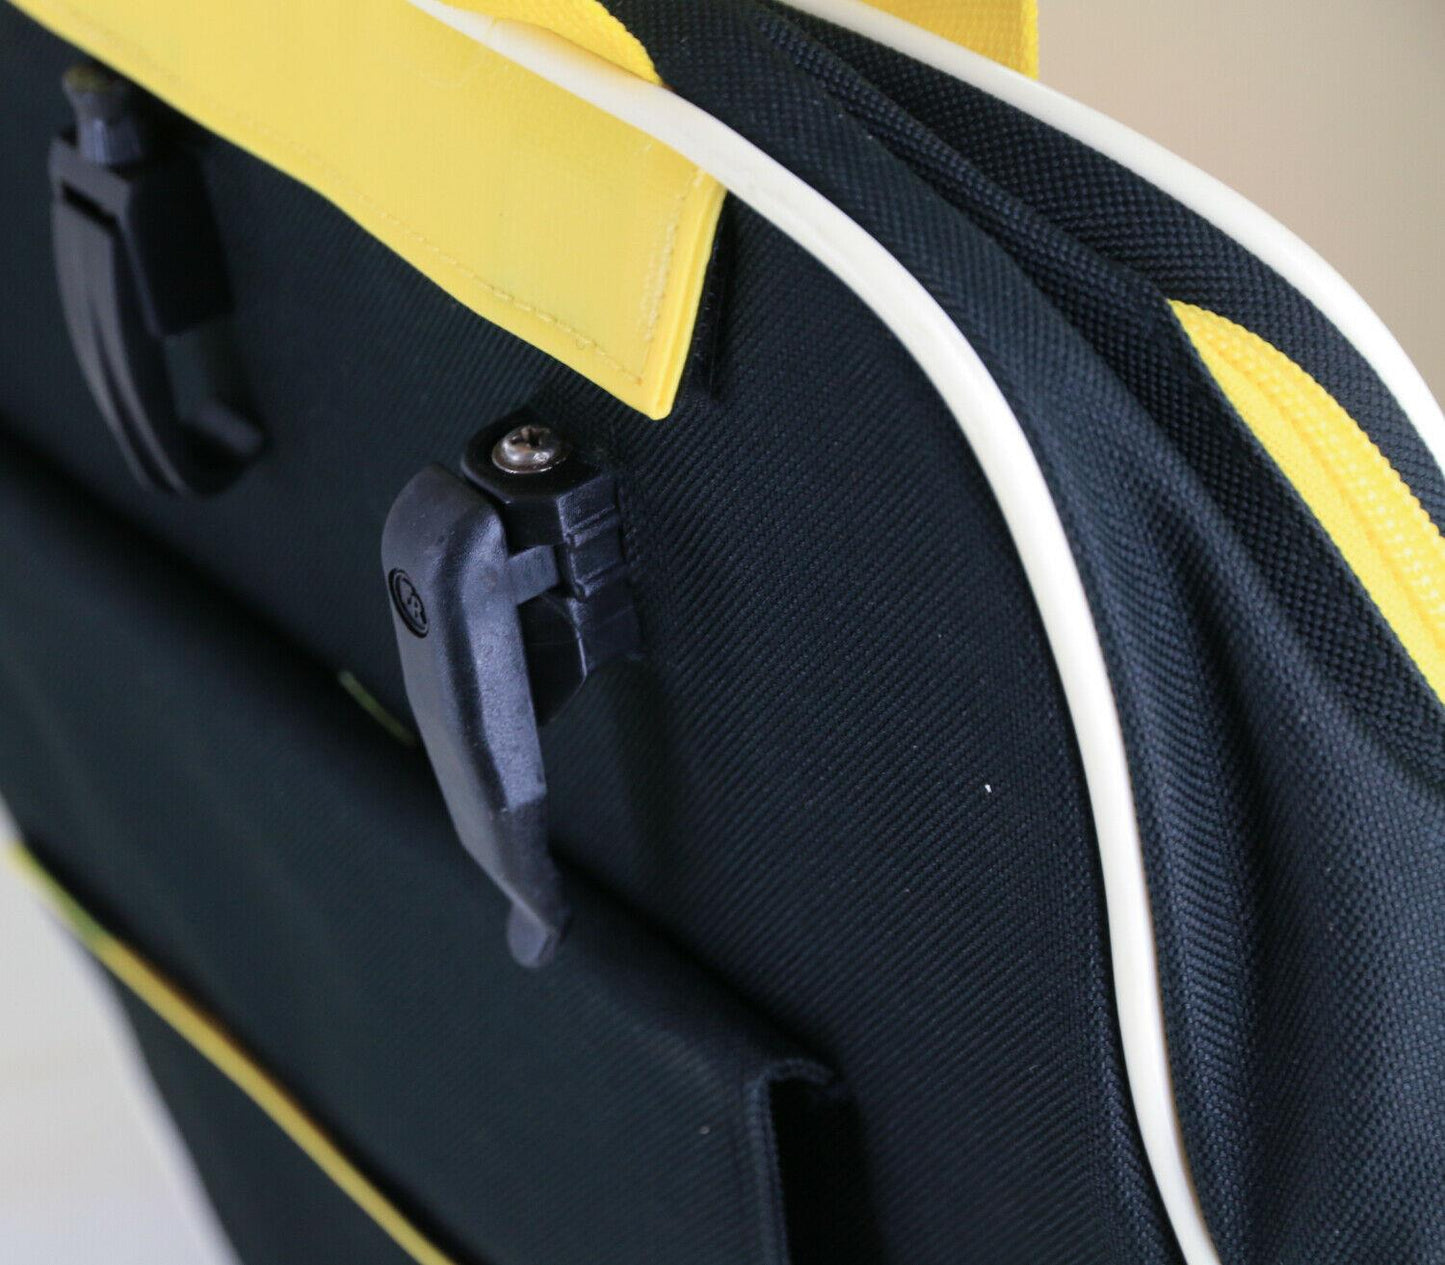 FastRider Young City Pannier Bike Bag 12.5L Water Resistant Black / Yellow NEW - Random Bike Parts